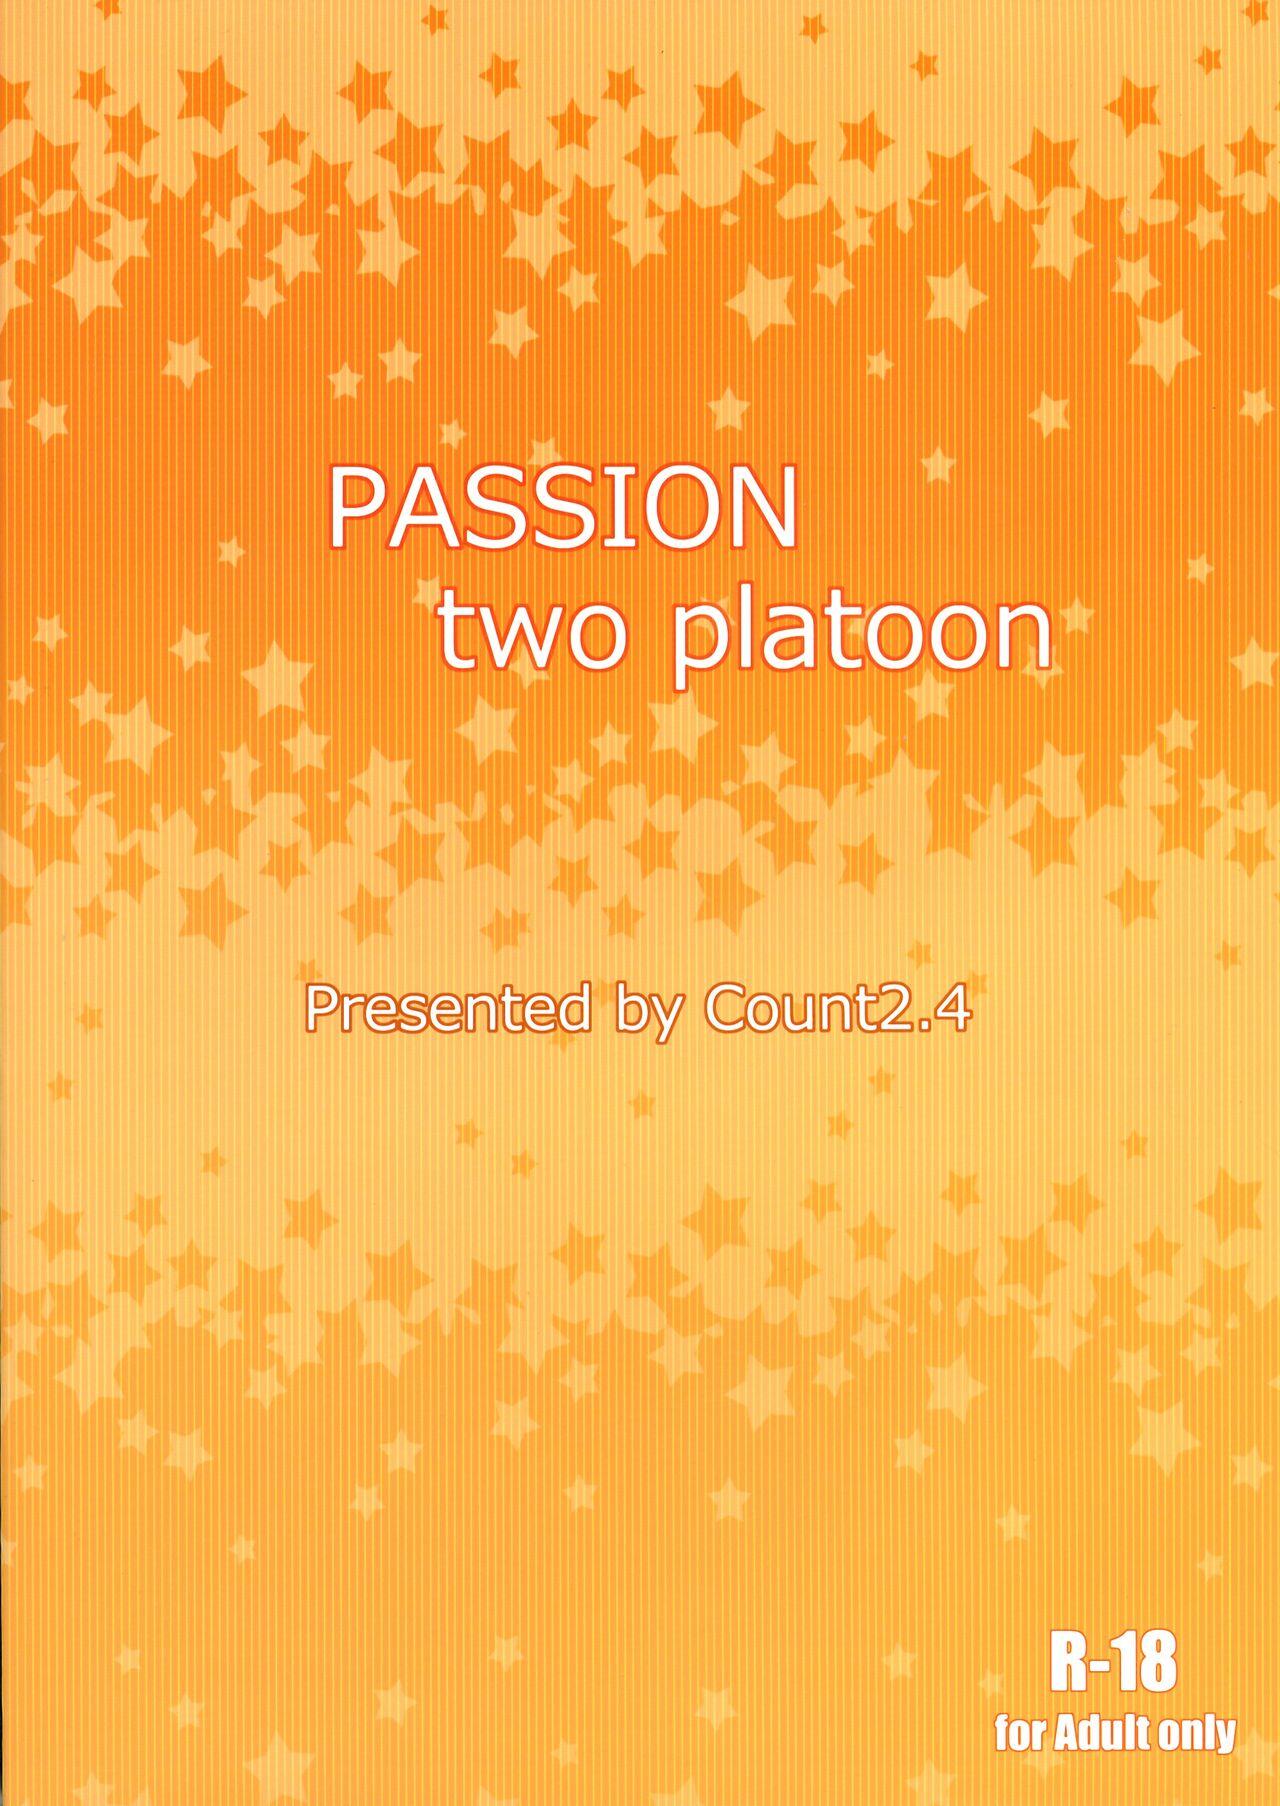 PASSION two platoon 25